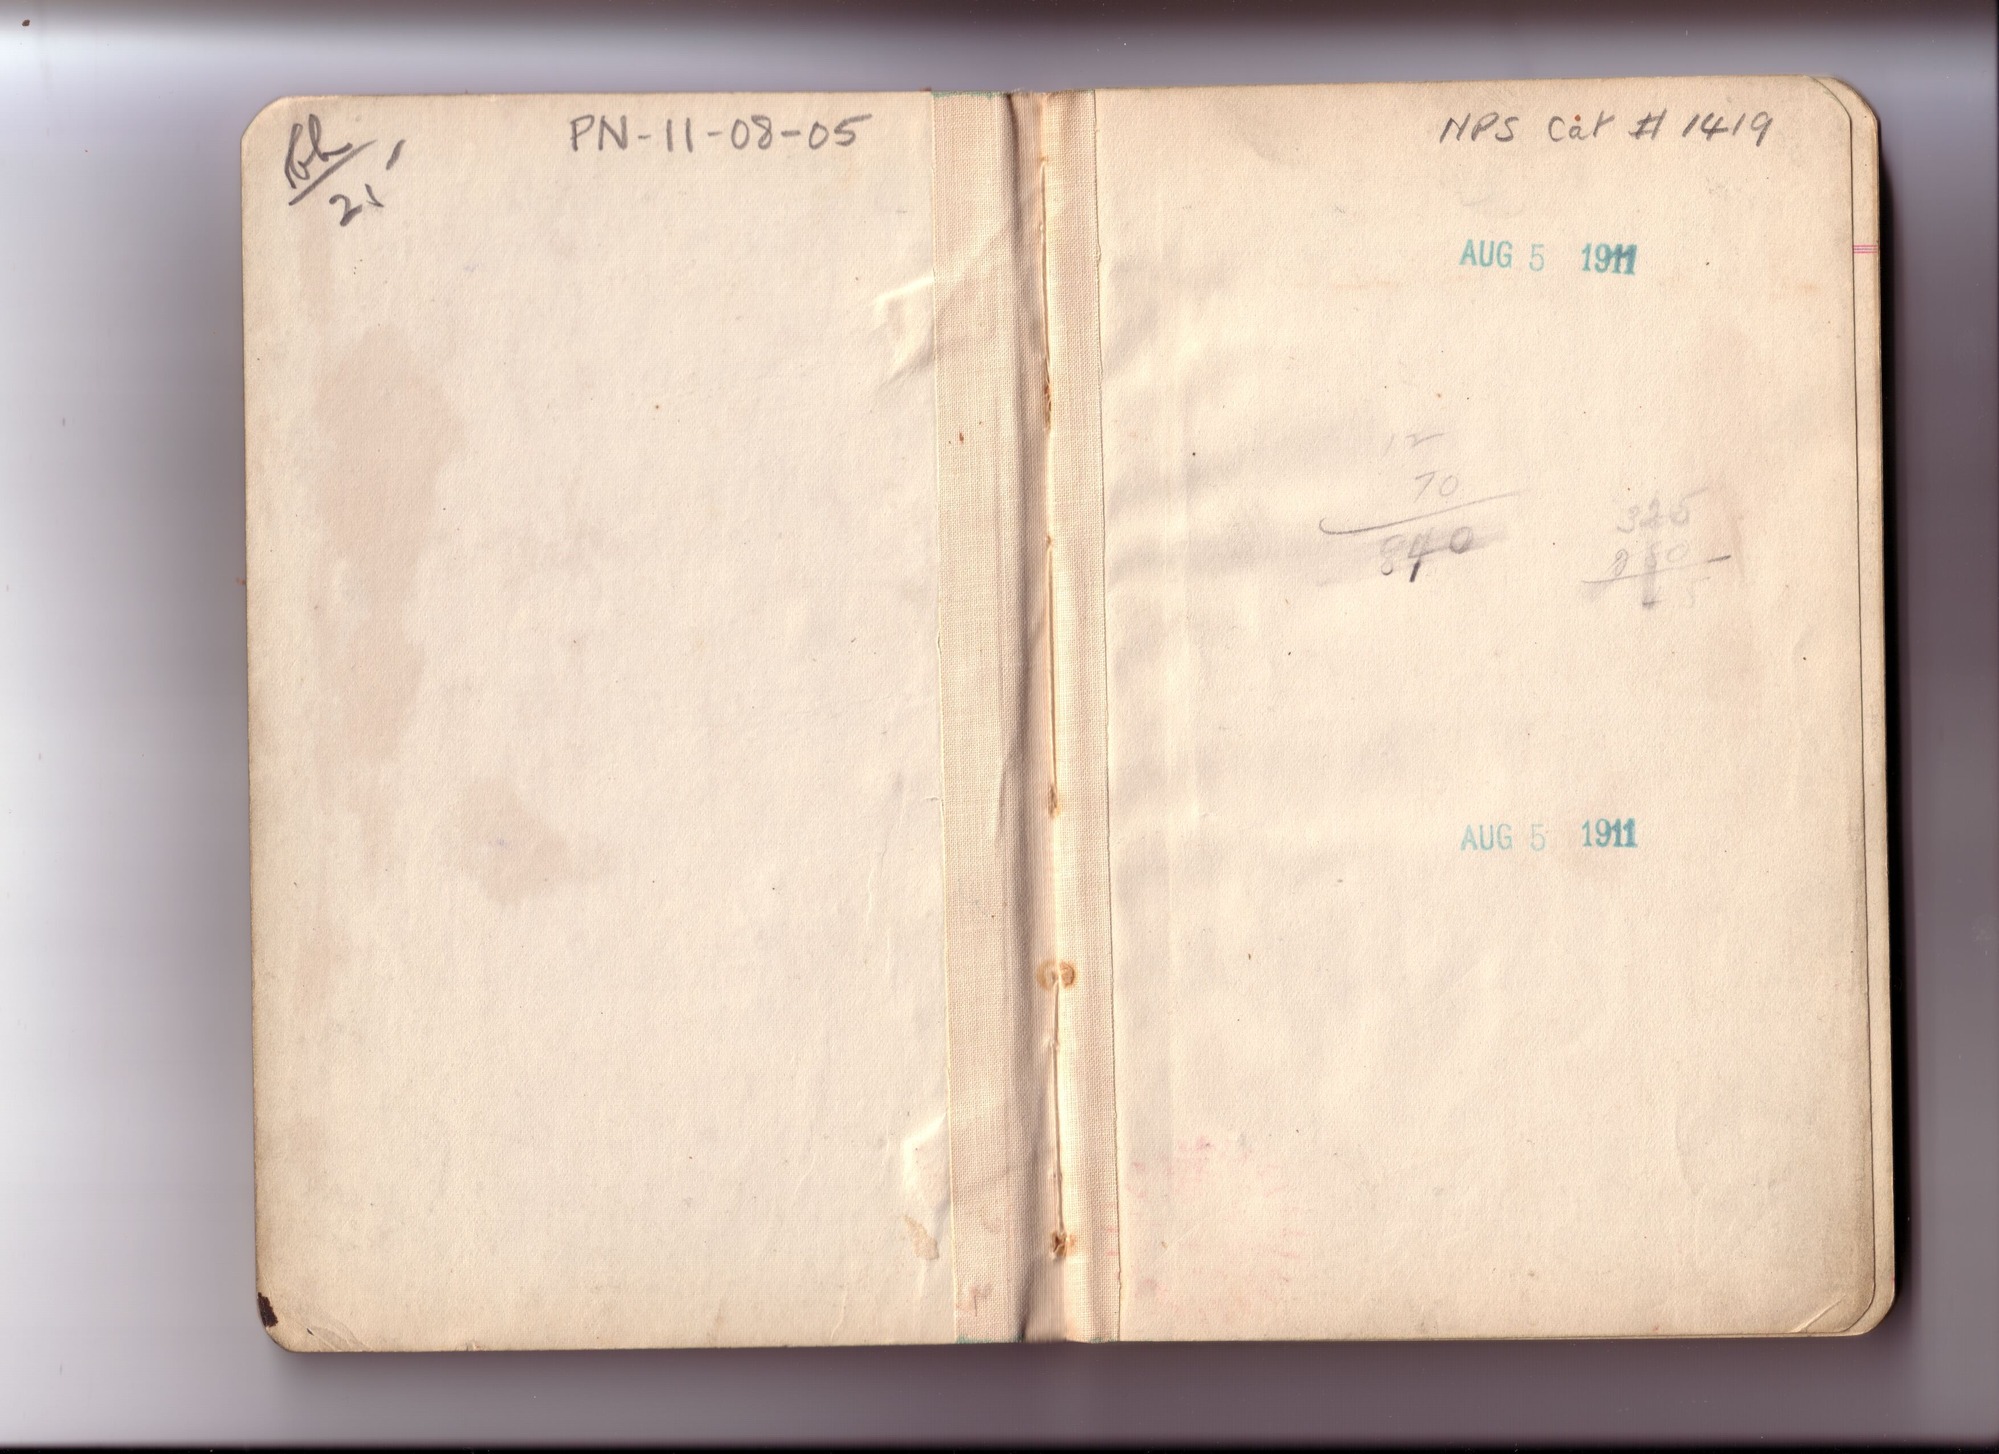 Thomas Edison's New York City Recording Studio Cash Book 08 (of 21), Image 02 (of 49).